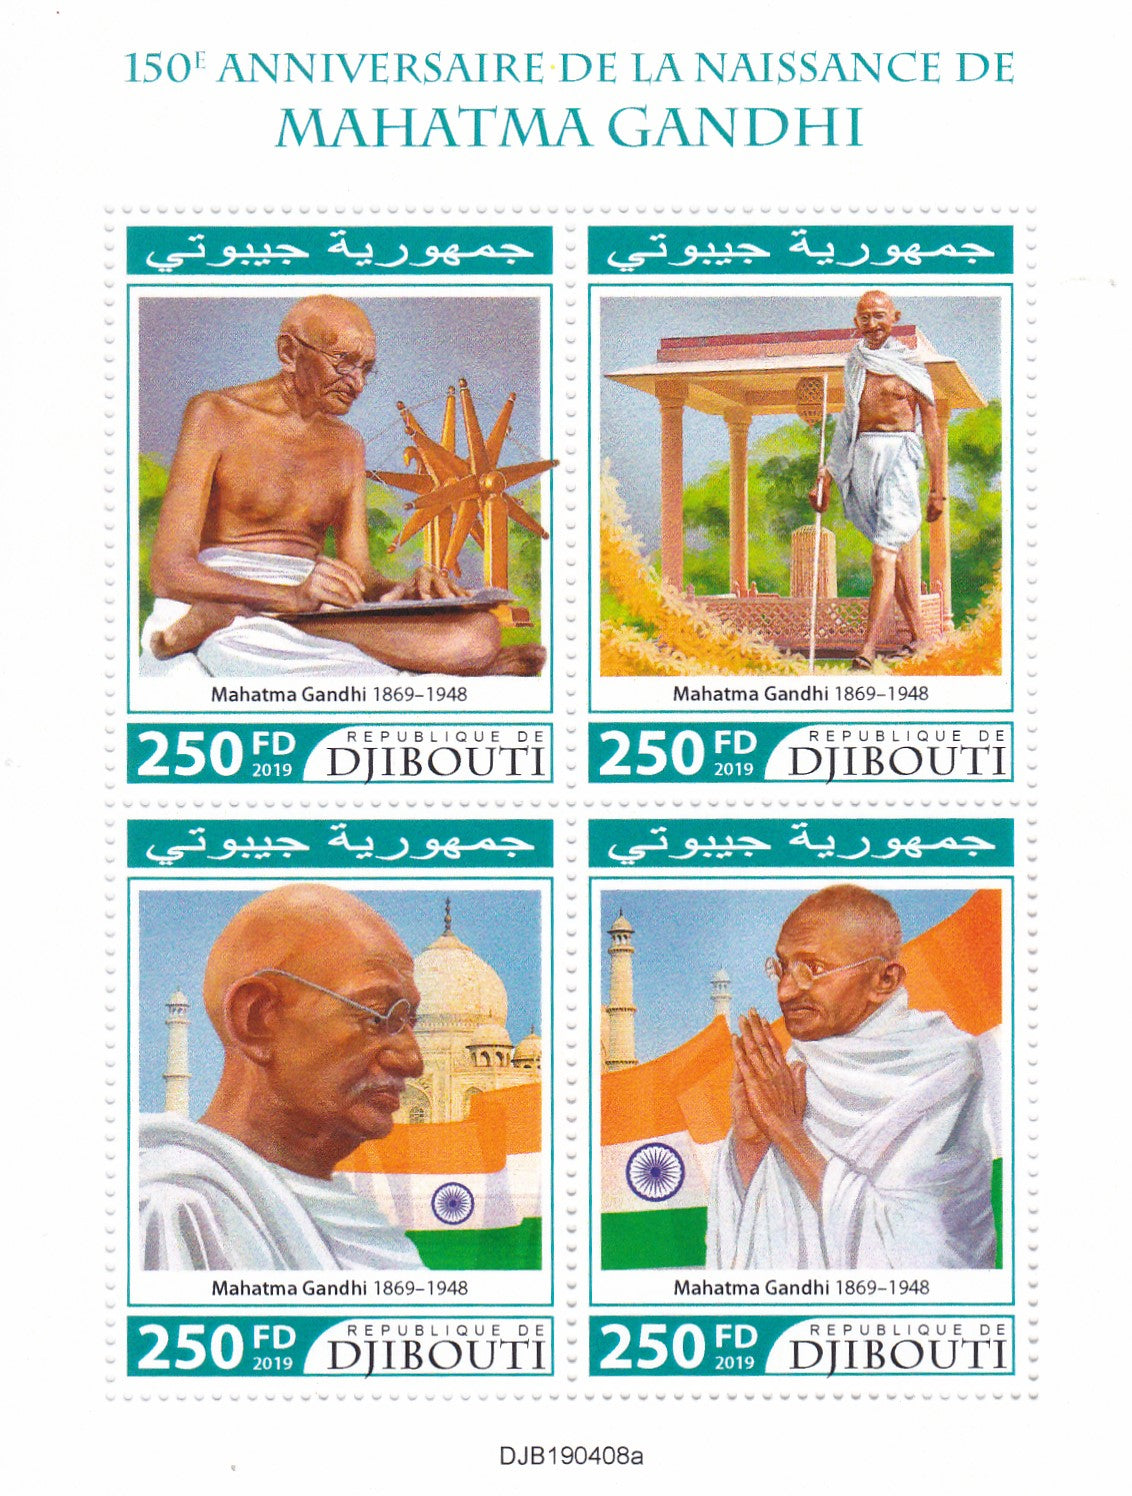 Djibouti-Mahatma Gandhi  2019 stamps